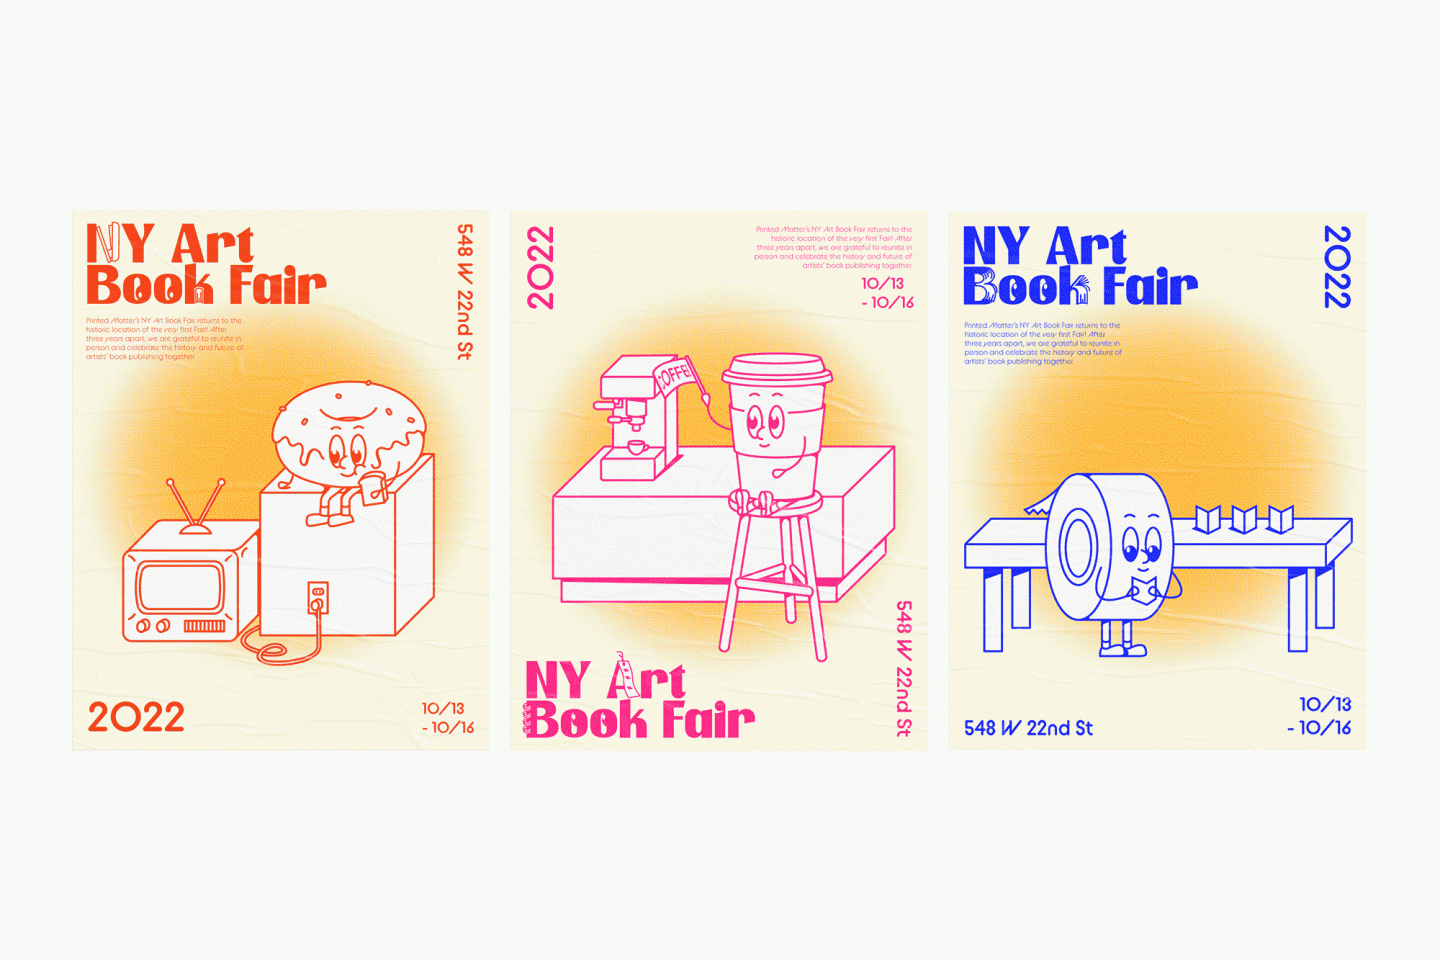 New York Art Book Fair